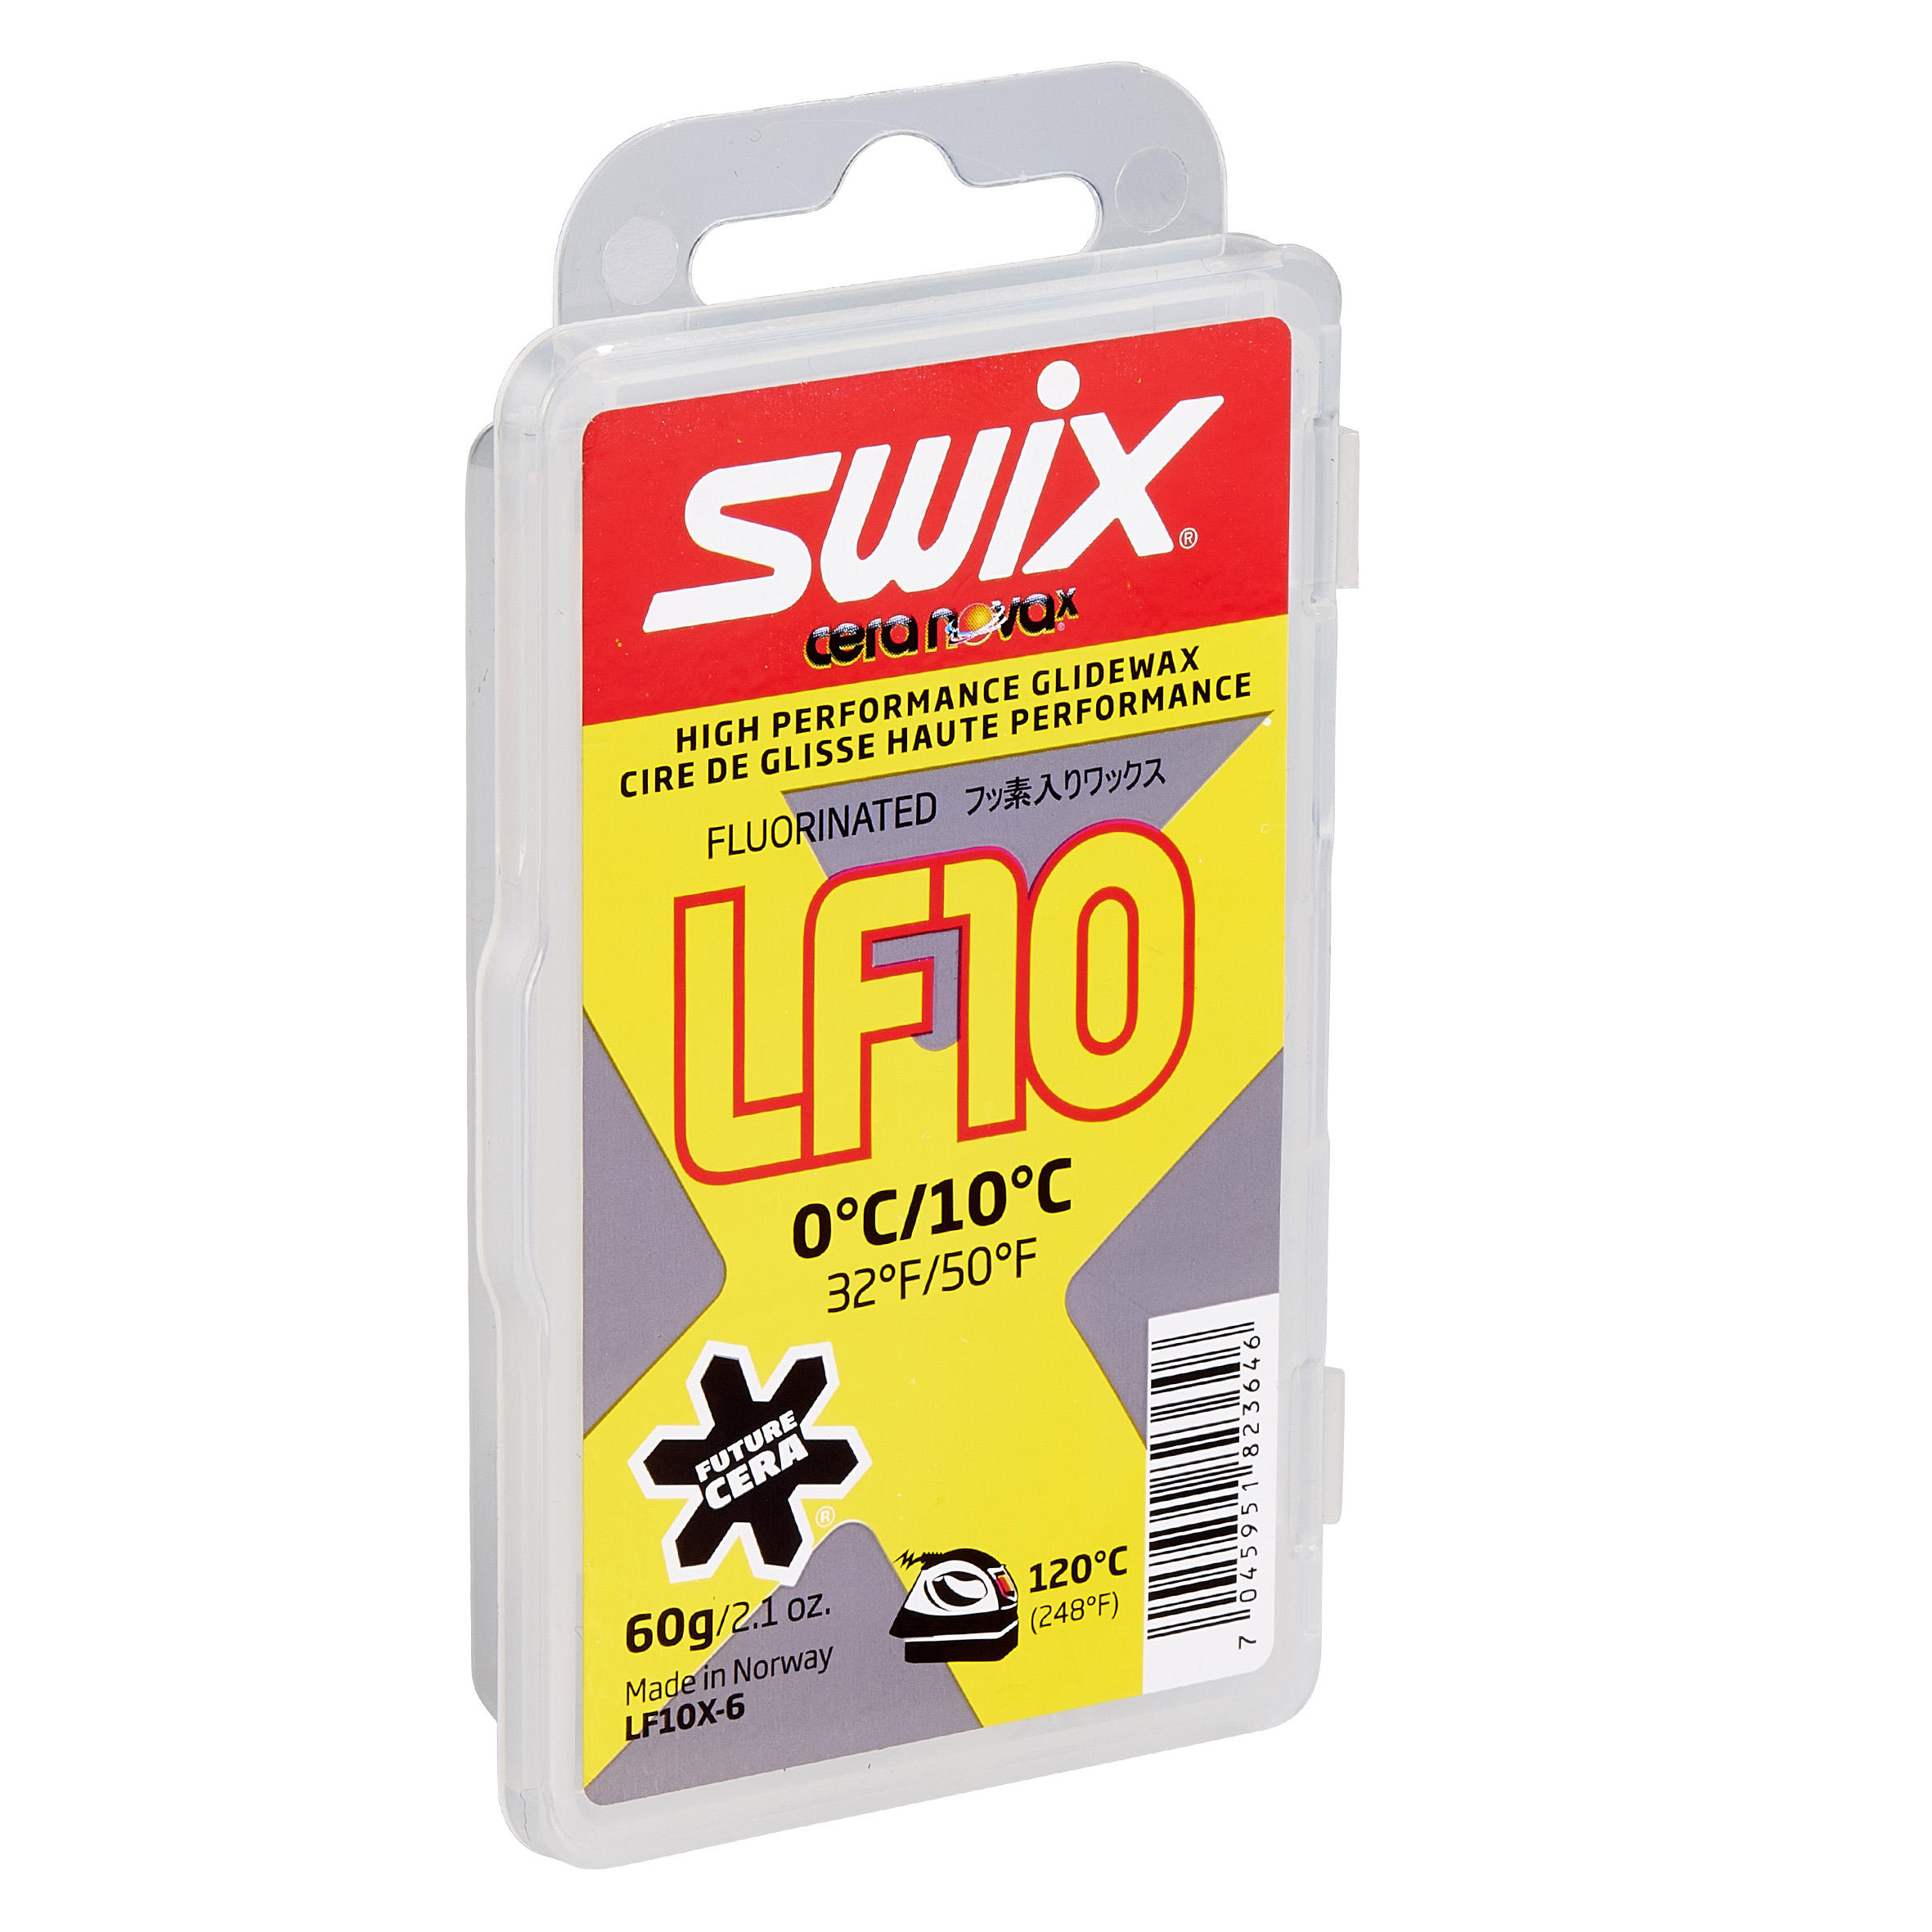 SWIX LF 10 Cross-Country Skiing Wax 0/+10 - Yellow